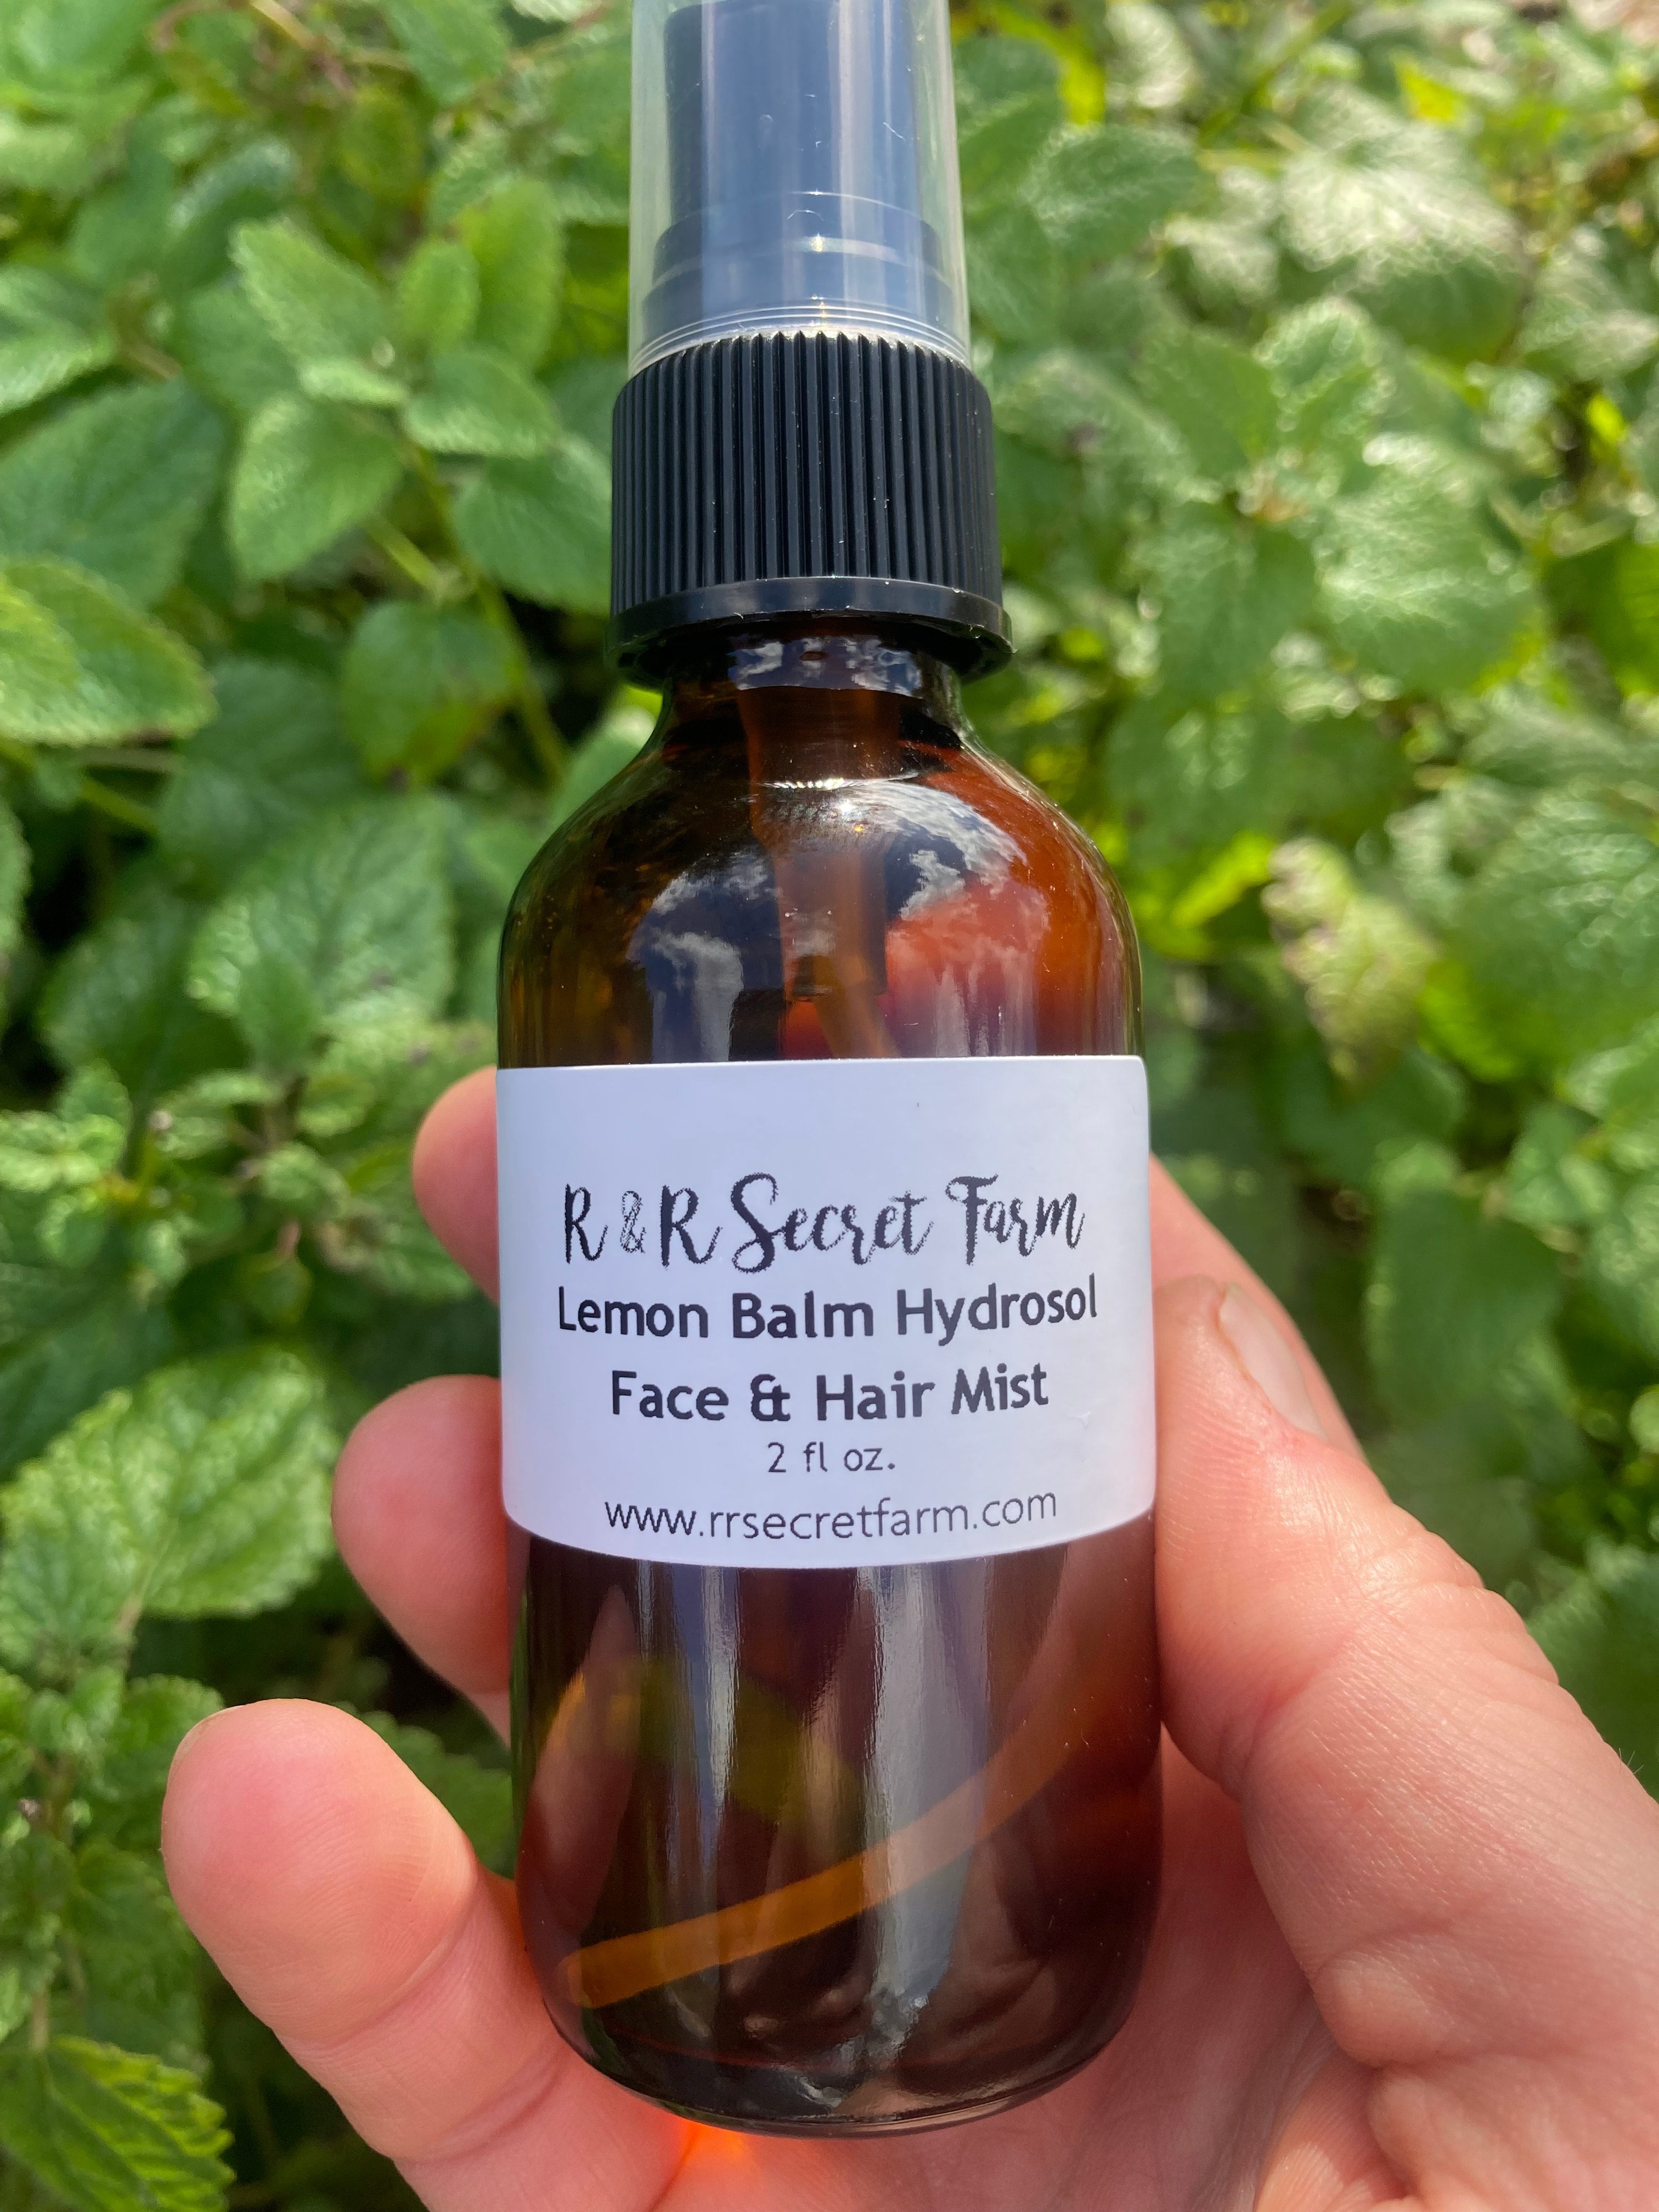 emon Balm Hydrosol - Face & Hair Mist R&R Secret Farm Local Organic Flower Farm Athens, GA Certified Natural Grown